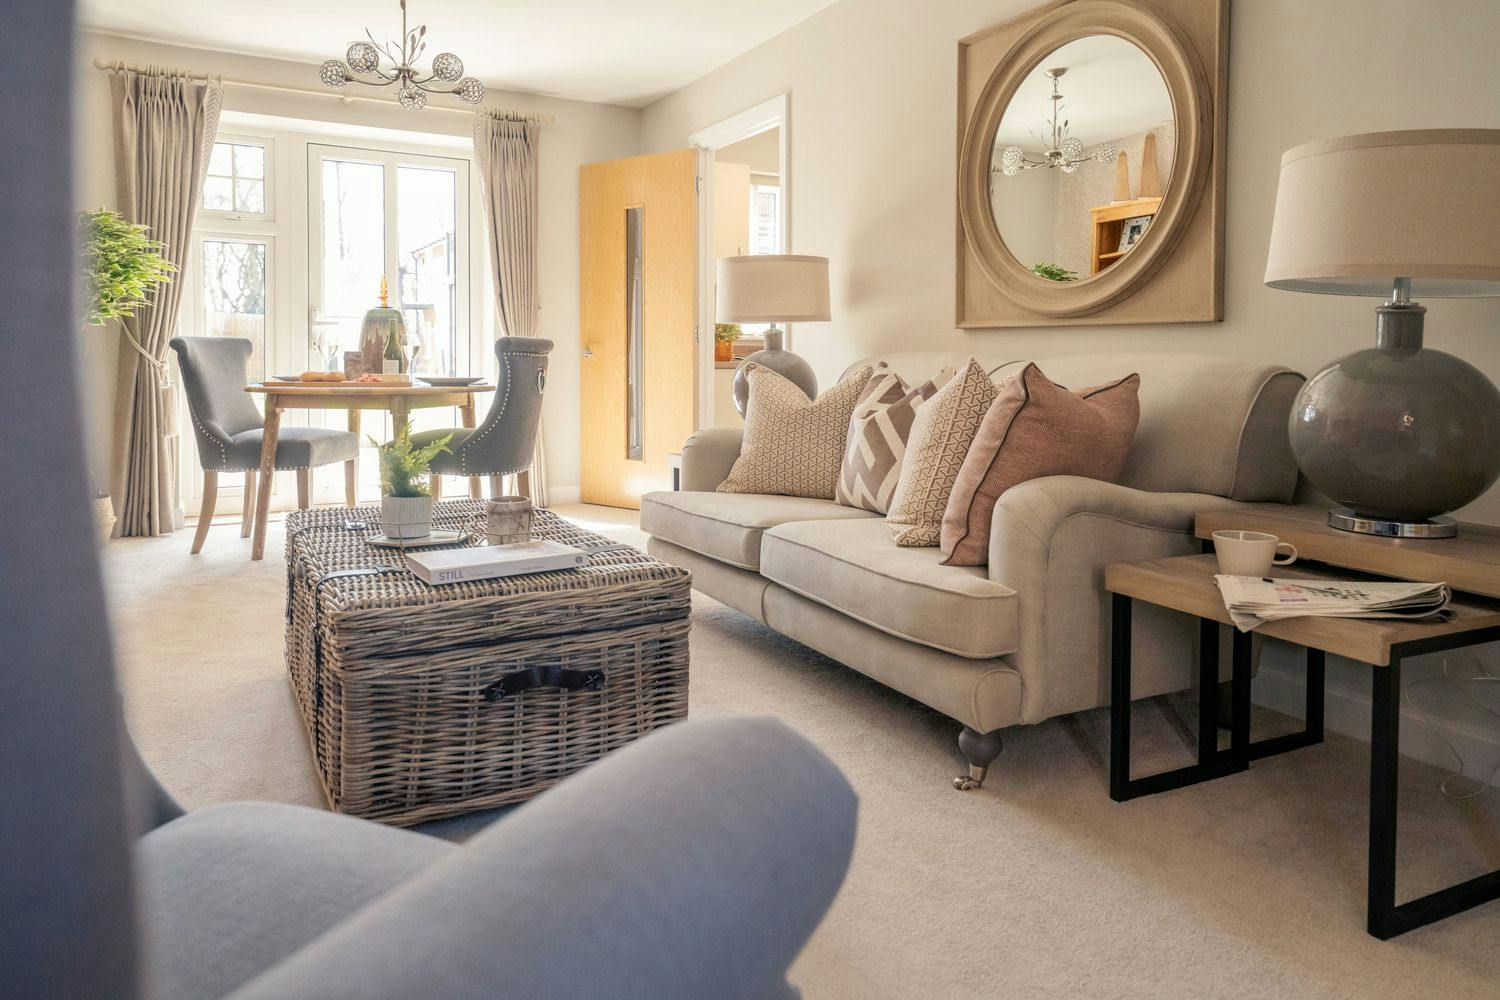 Living Room at at Kenton Lodge Retirement Development in Gosforth, Newcastle-upon-Tyne